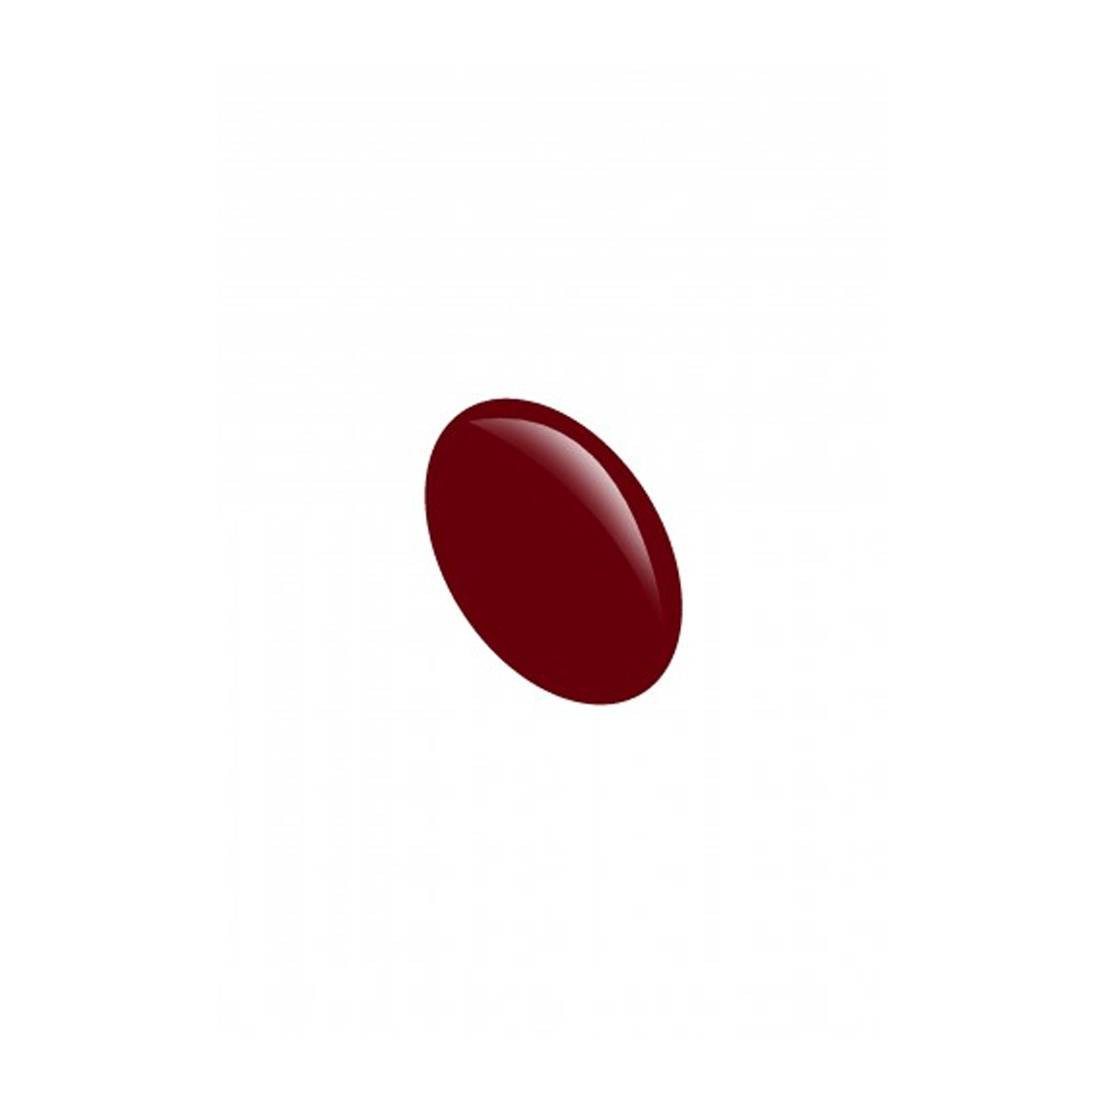 Лак для нігтів Винно-червоний Fedua Vernici Ultimate Collection Wine Red